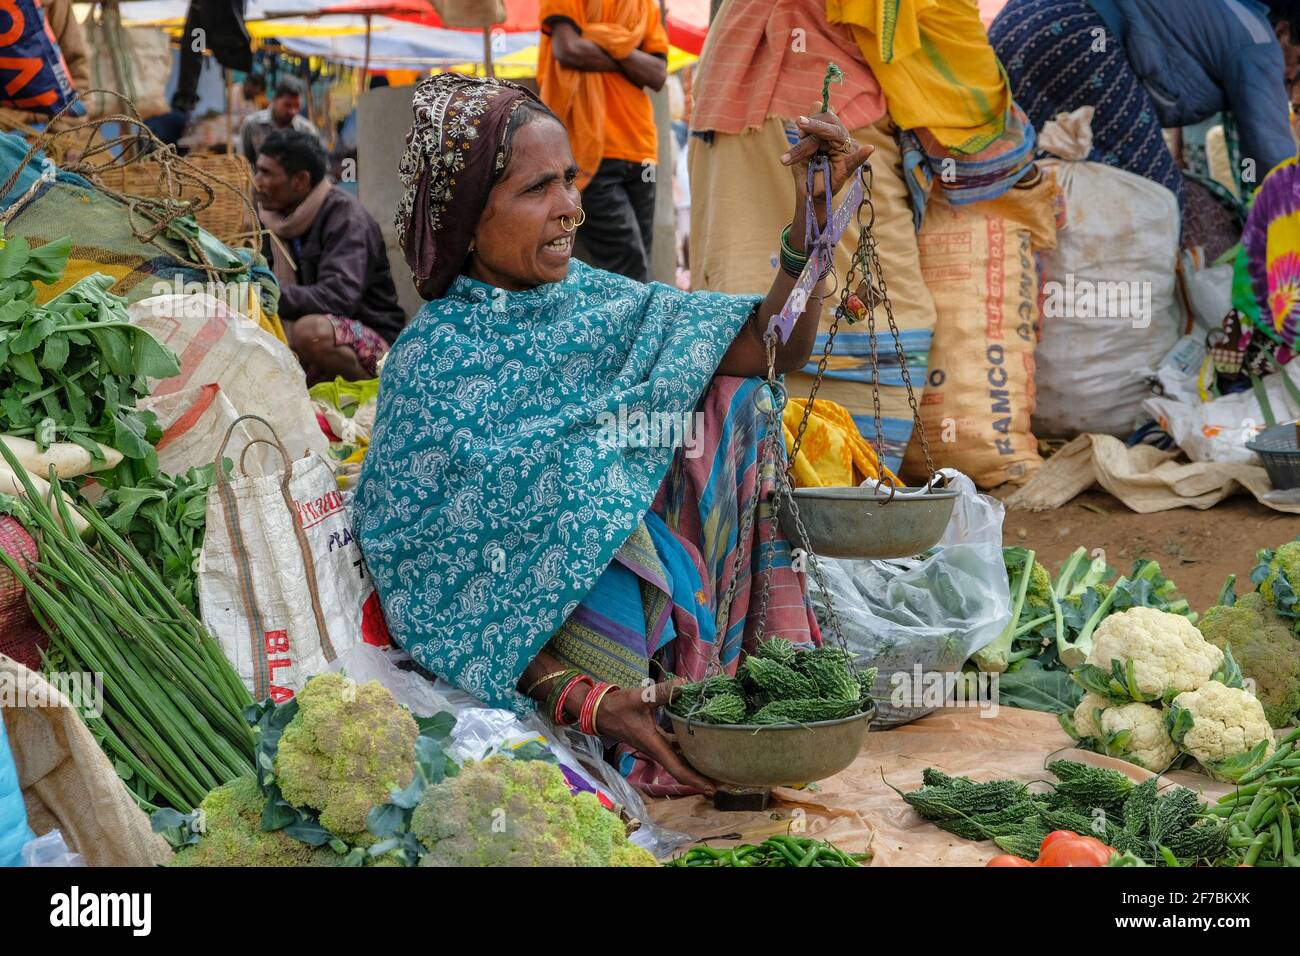 Kunduli, India - February 2021: Adivasi woman from the Mali tribe selling vegetables in the Kunduli market on February 19, 2021 in Odisha, India. Stock Photo